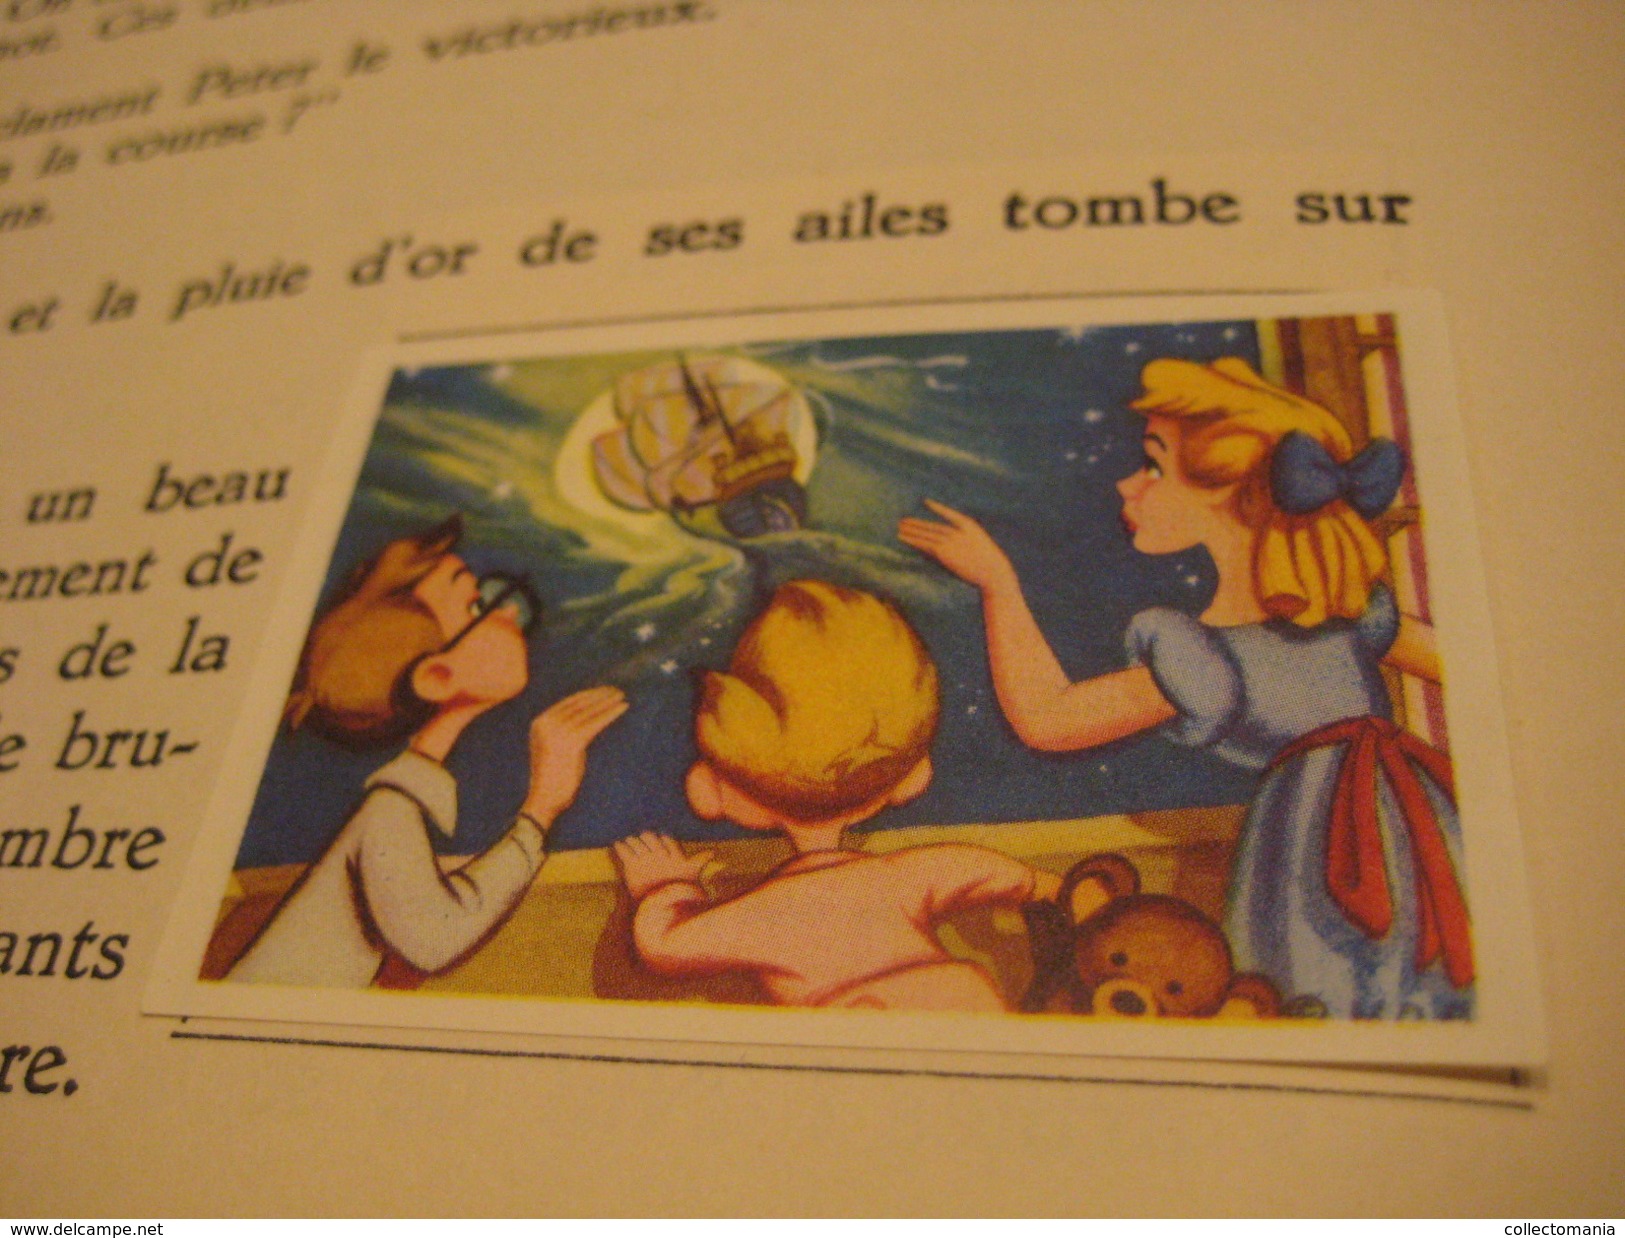 4 complete albulms  '50 's De Beukelaer, in albums, Disney, chocolat cards Robin hood,3 pigs, Peter Pan, Pinocchio VG